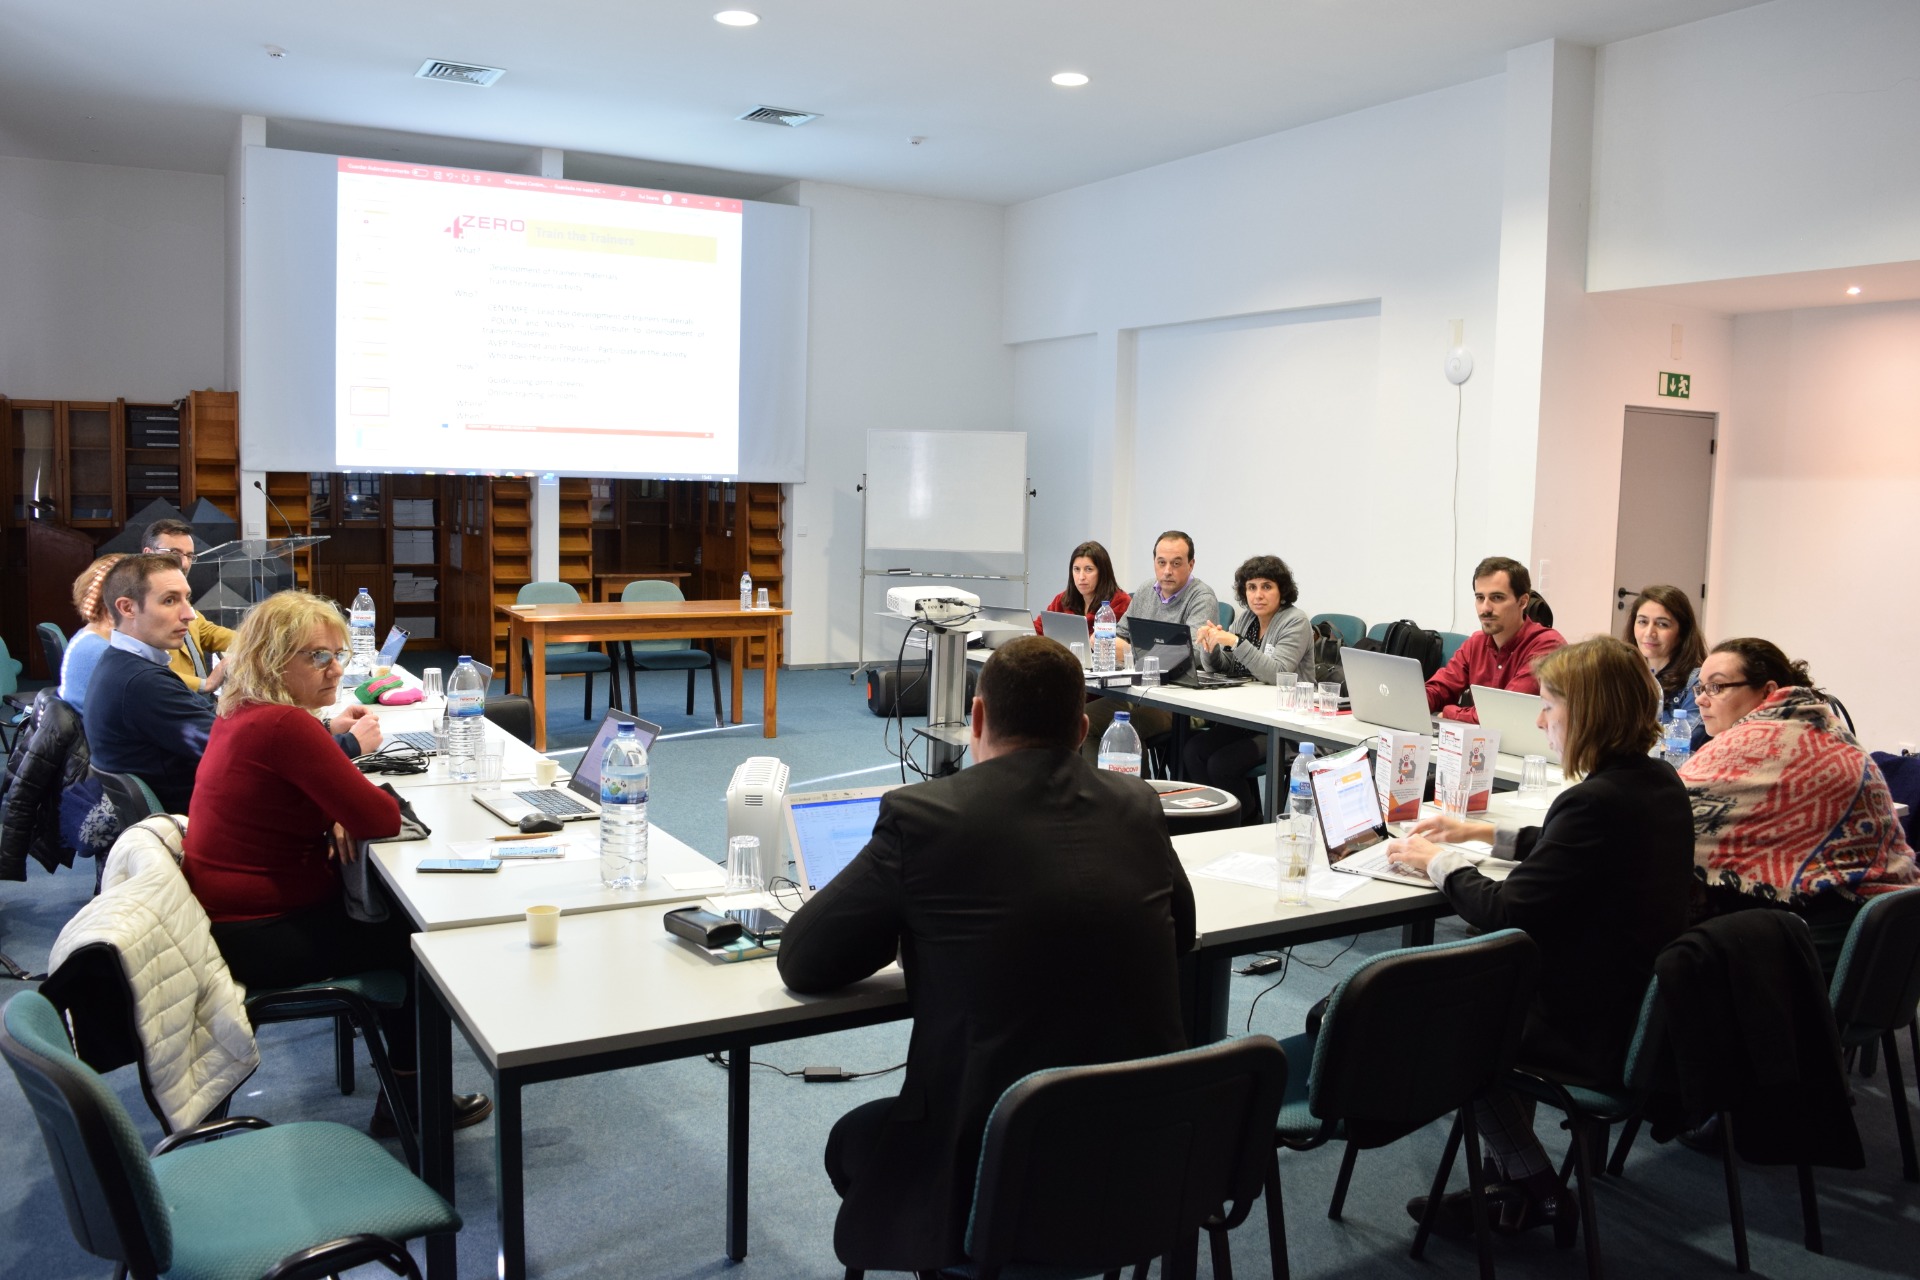 4zeroPlast project – 3rd meeting in Lisbon